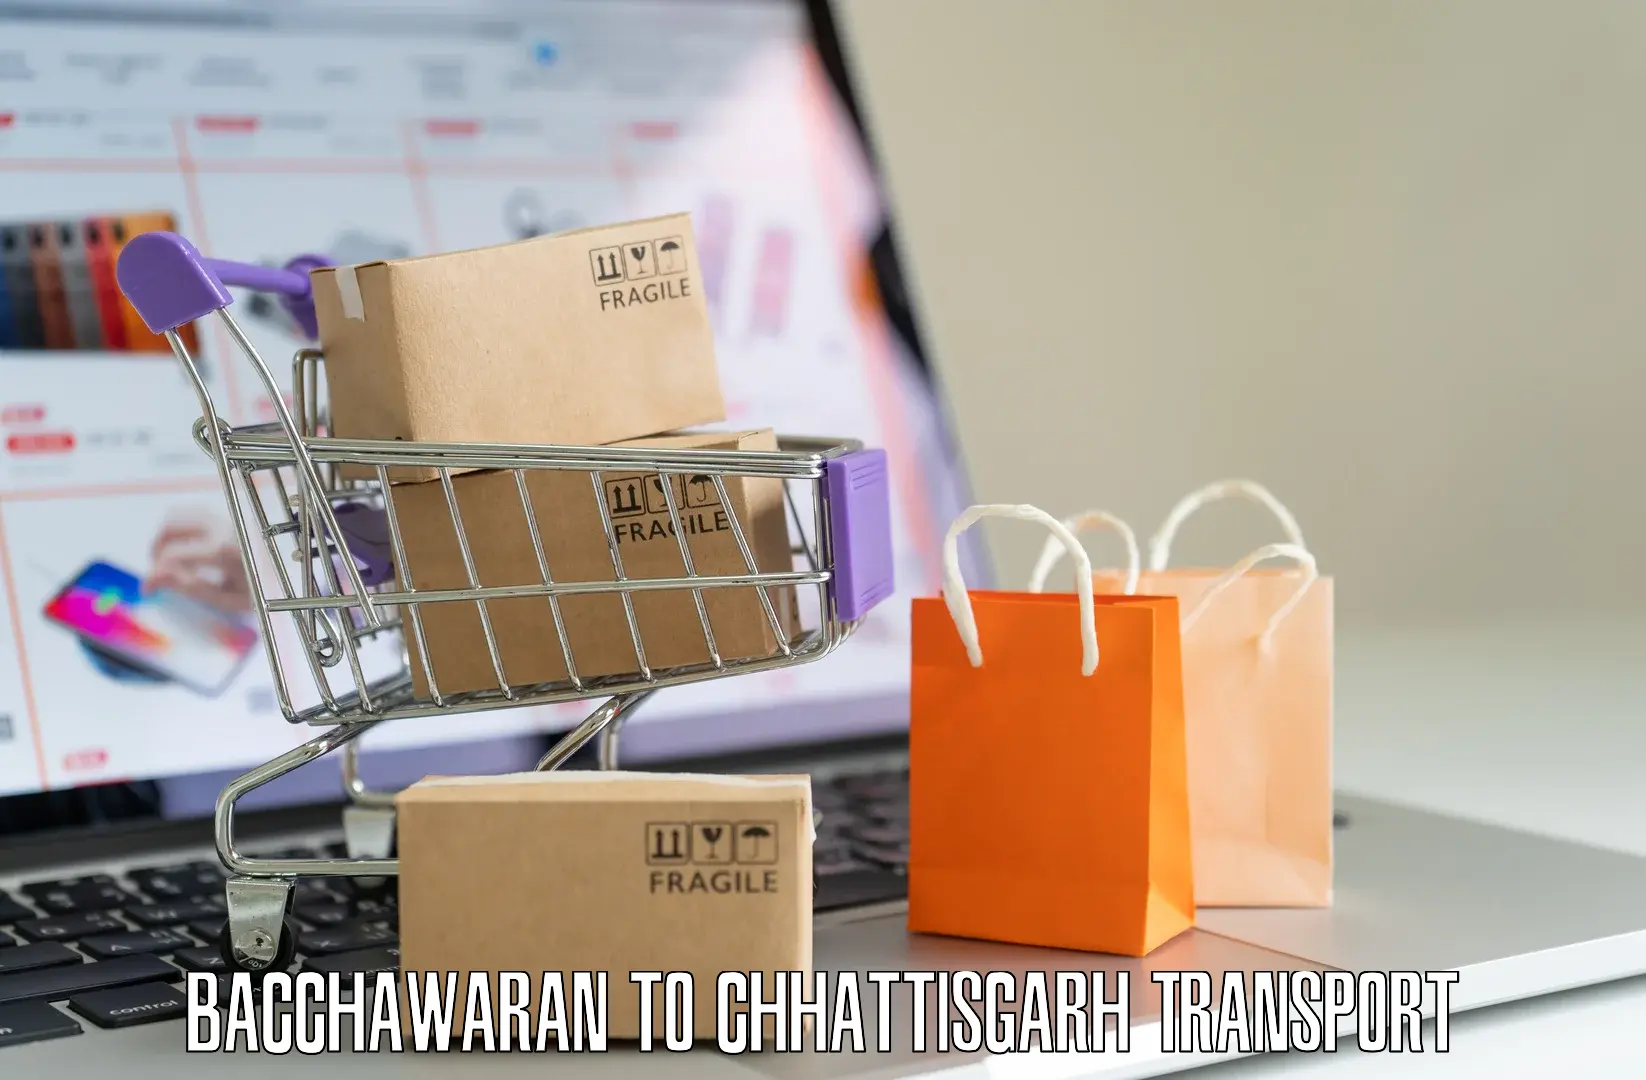 Transport in sharing Bacchawaran to Patna Chhattisgarh